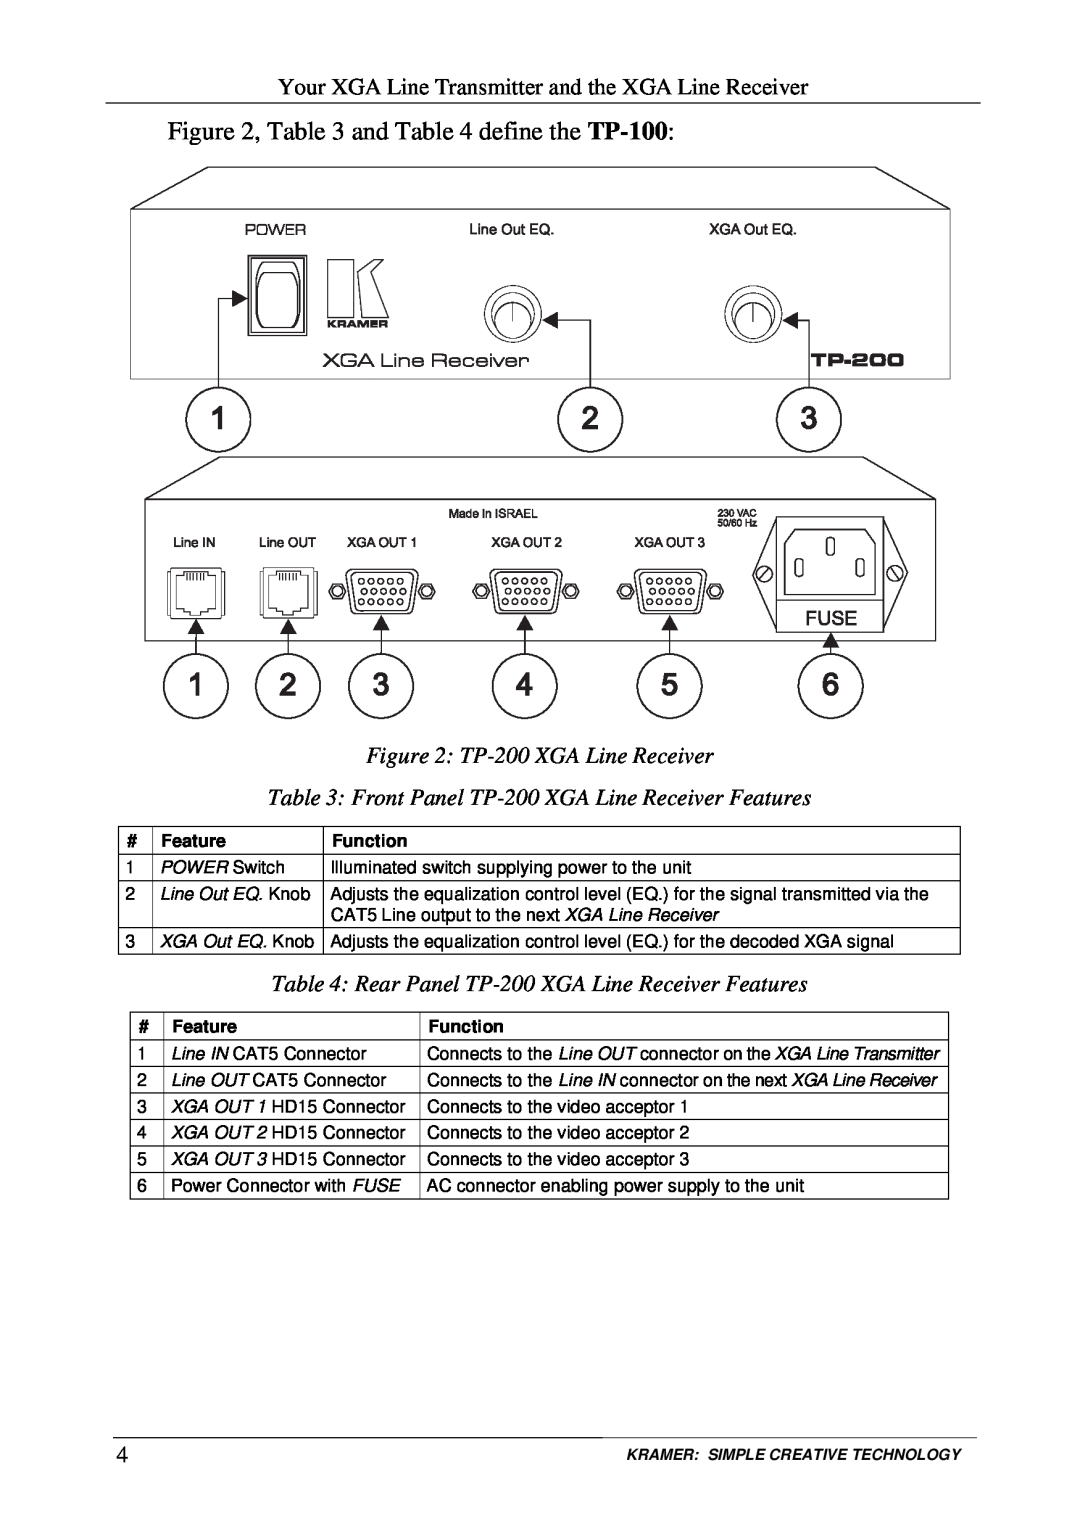 Kramer Electronics user manual and define the TP-100 